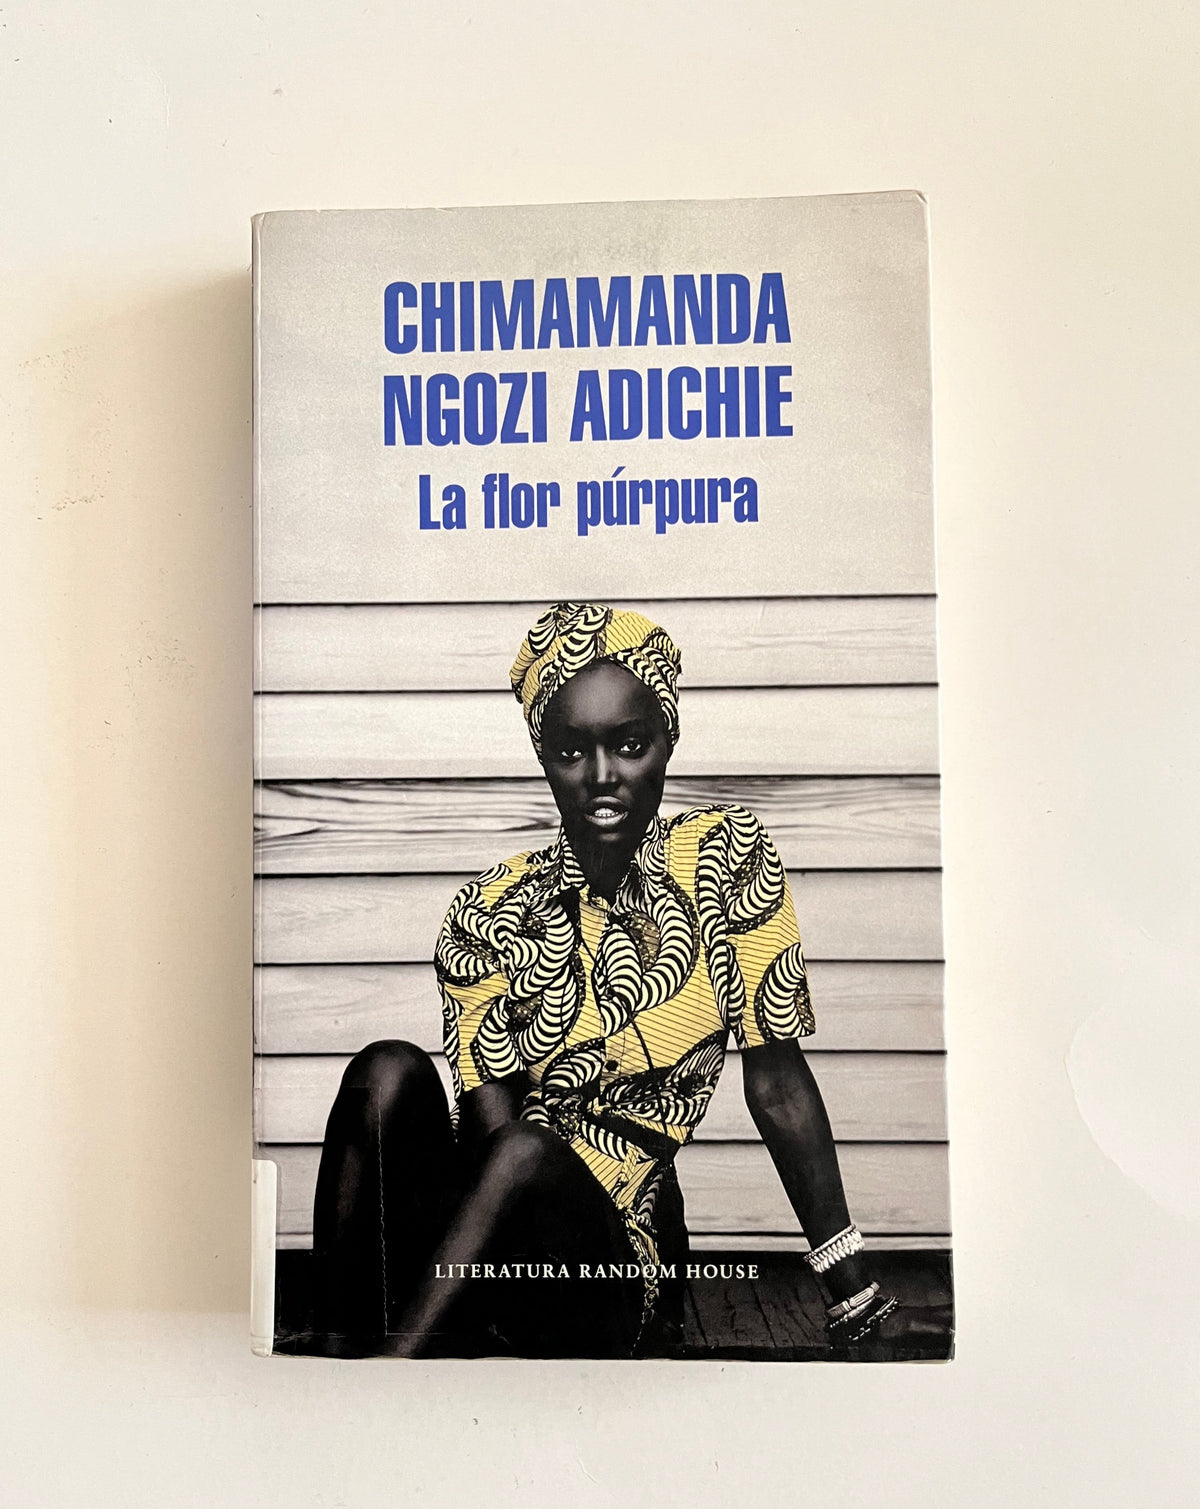 La Flor Purpura por Chimamanda Ngozi Adichie